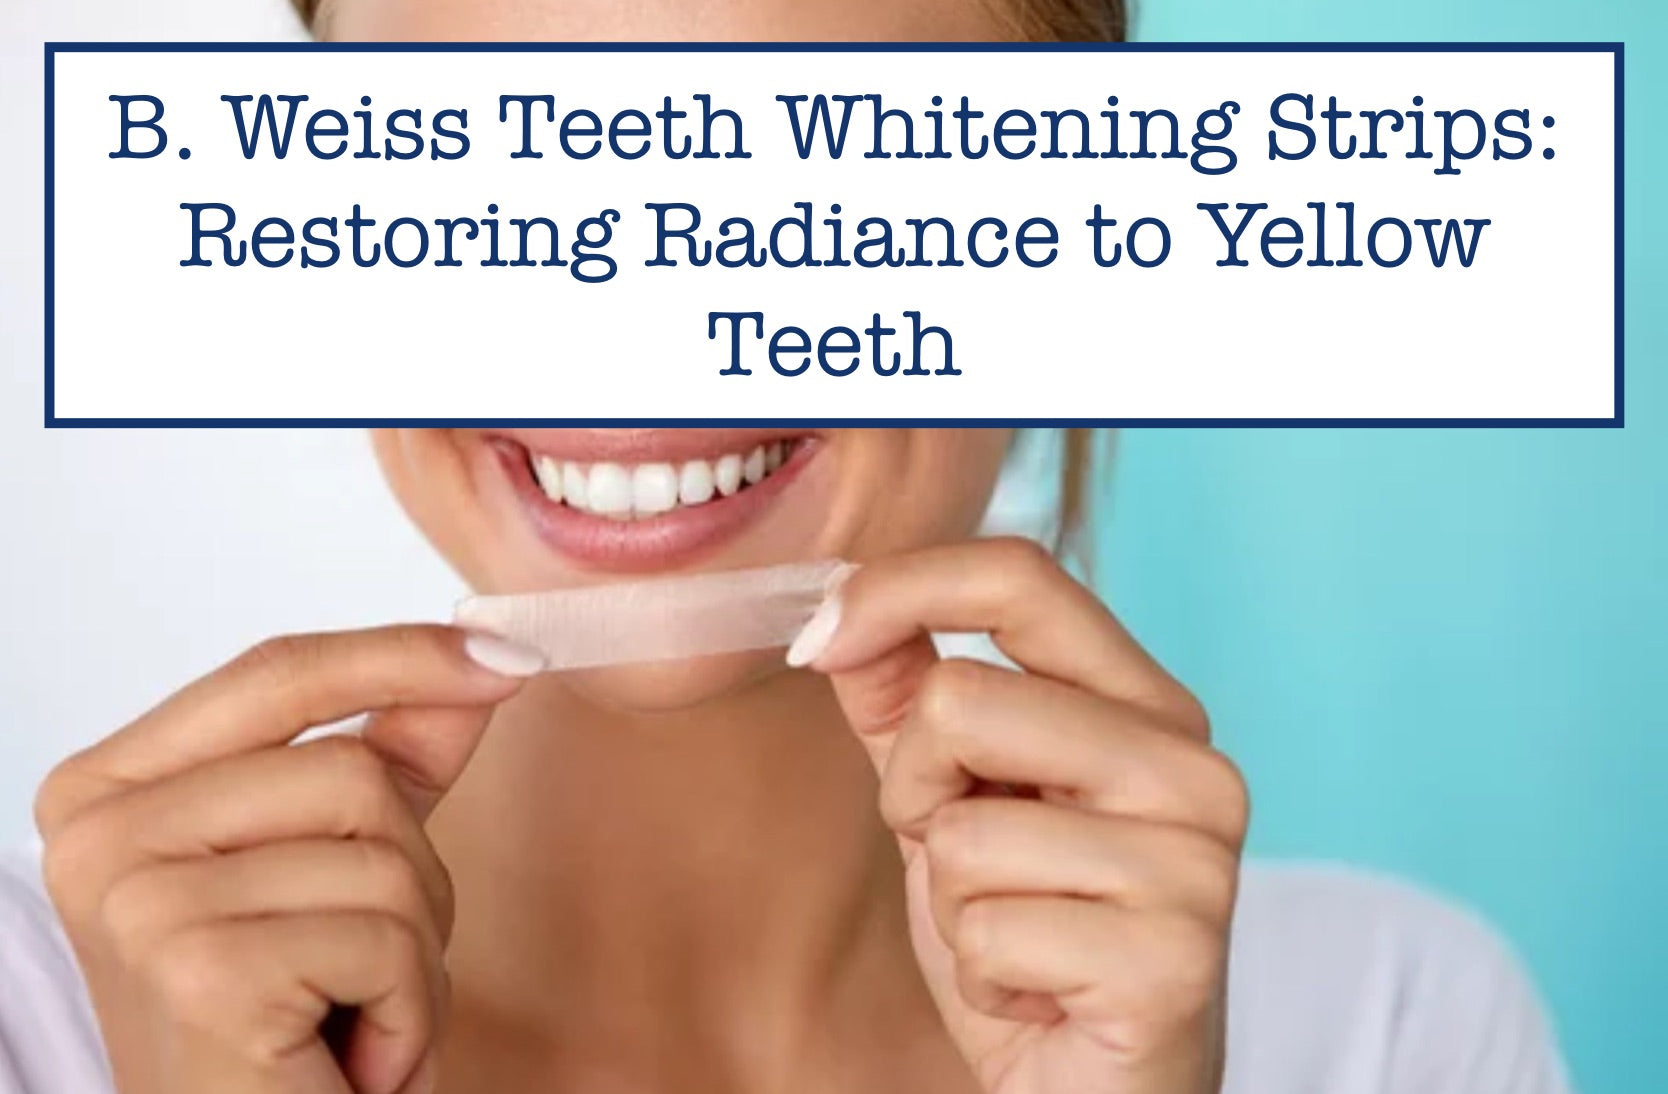 B. Weiss Teeth Whitening Strips: Restoring Radiance to Yellow Teeth